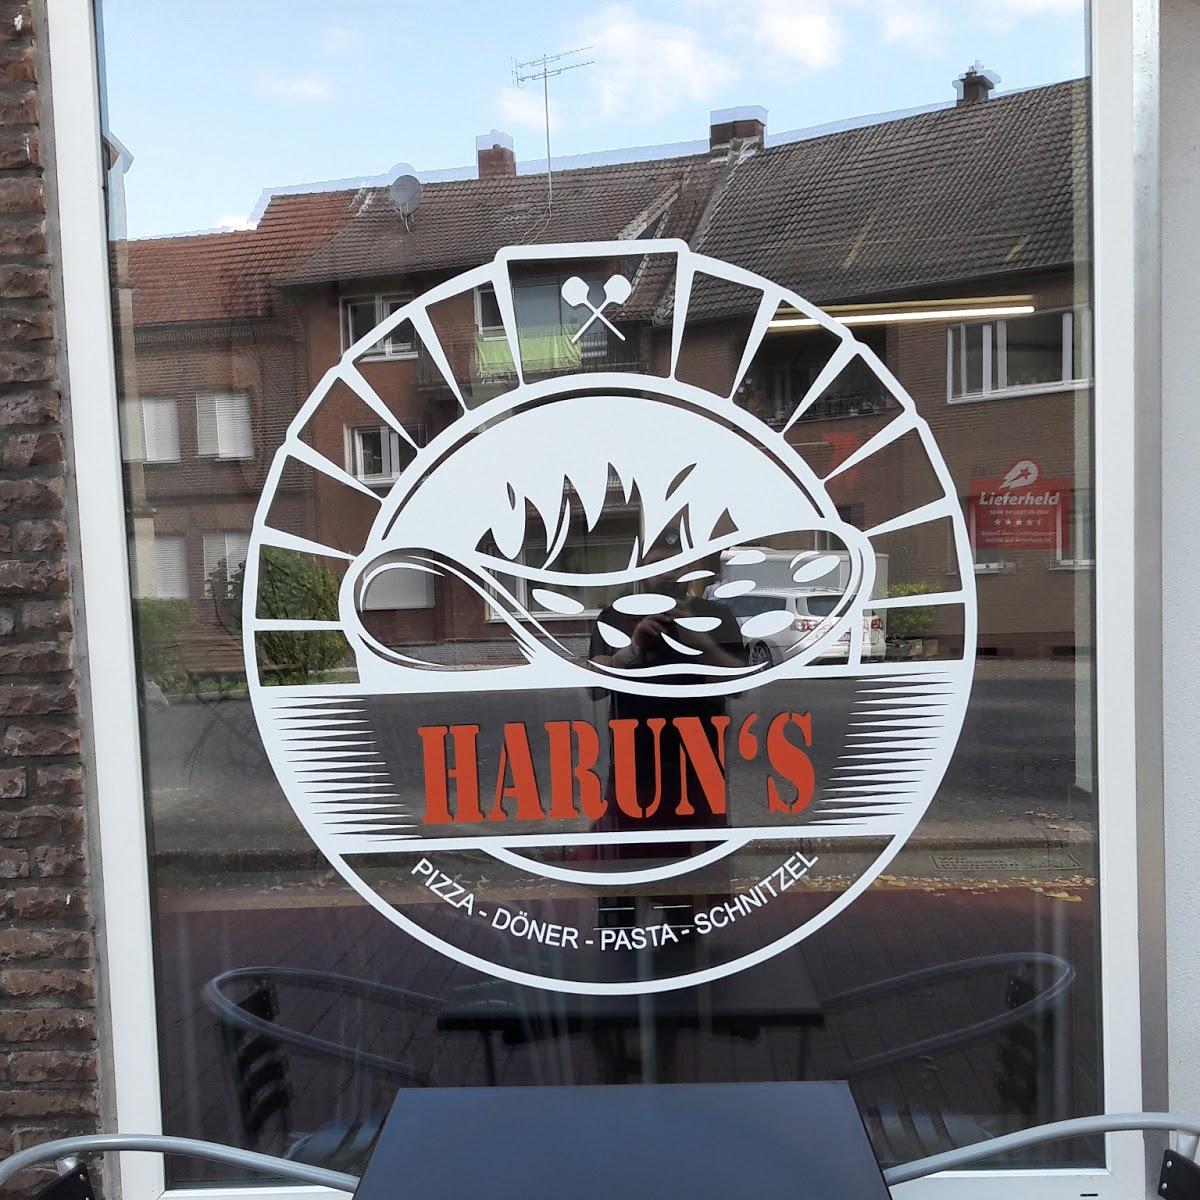 Restaurant "Harun